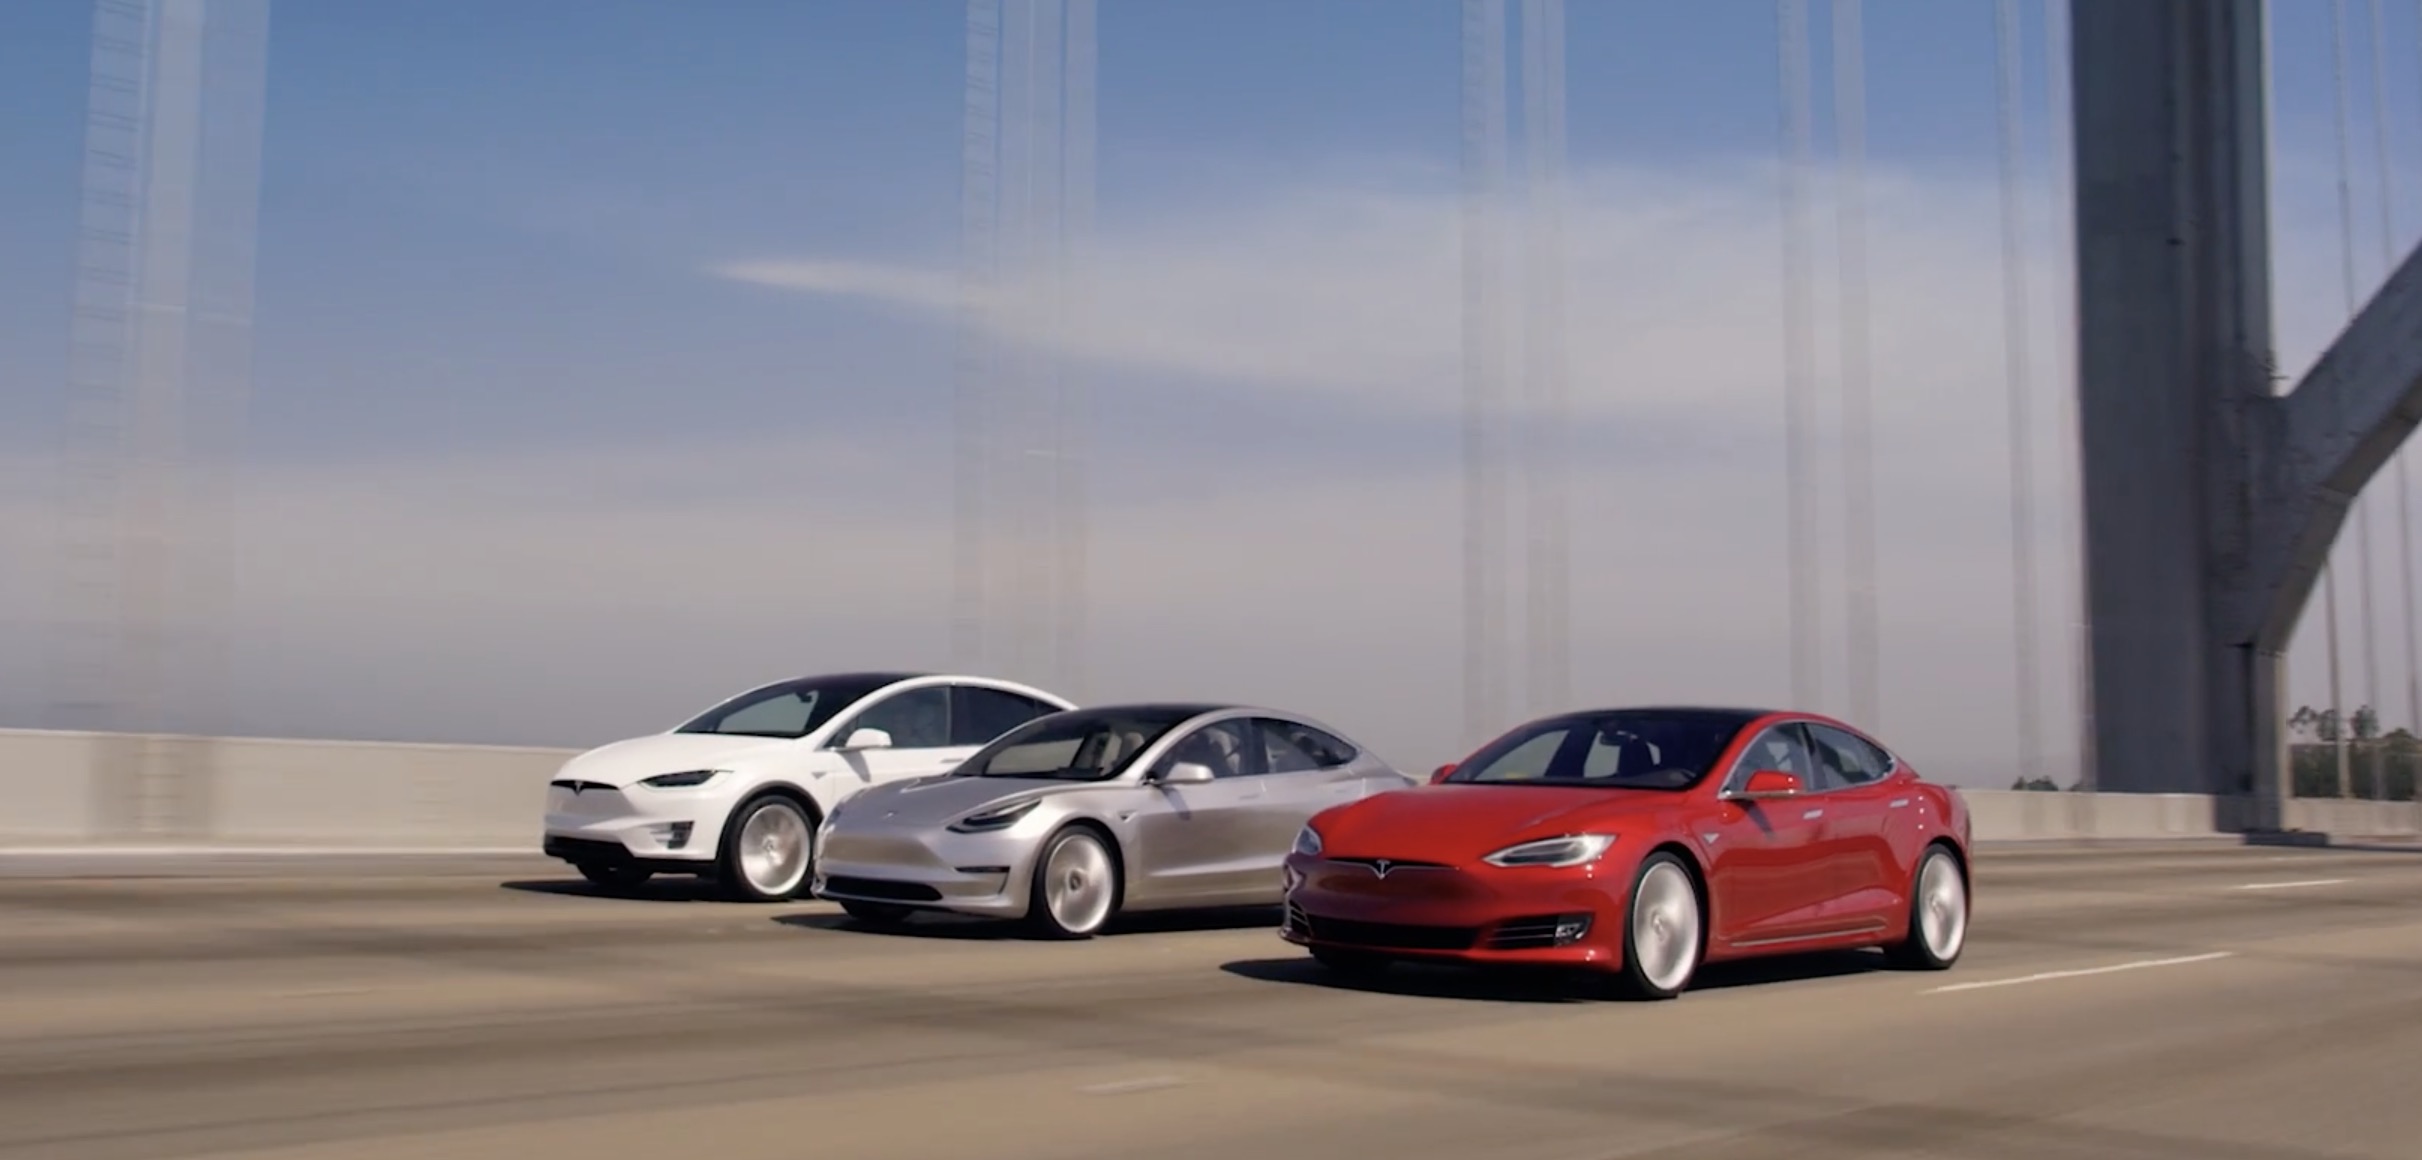 Autotrader's List of Best EVs Excludes Tesla, Which Should